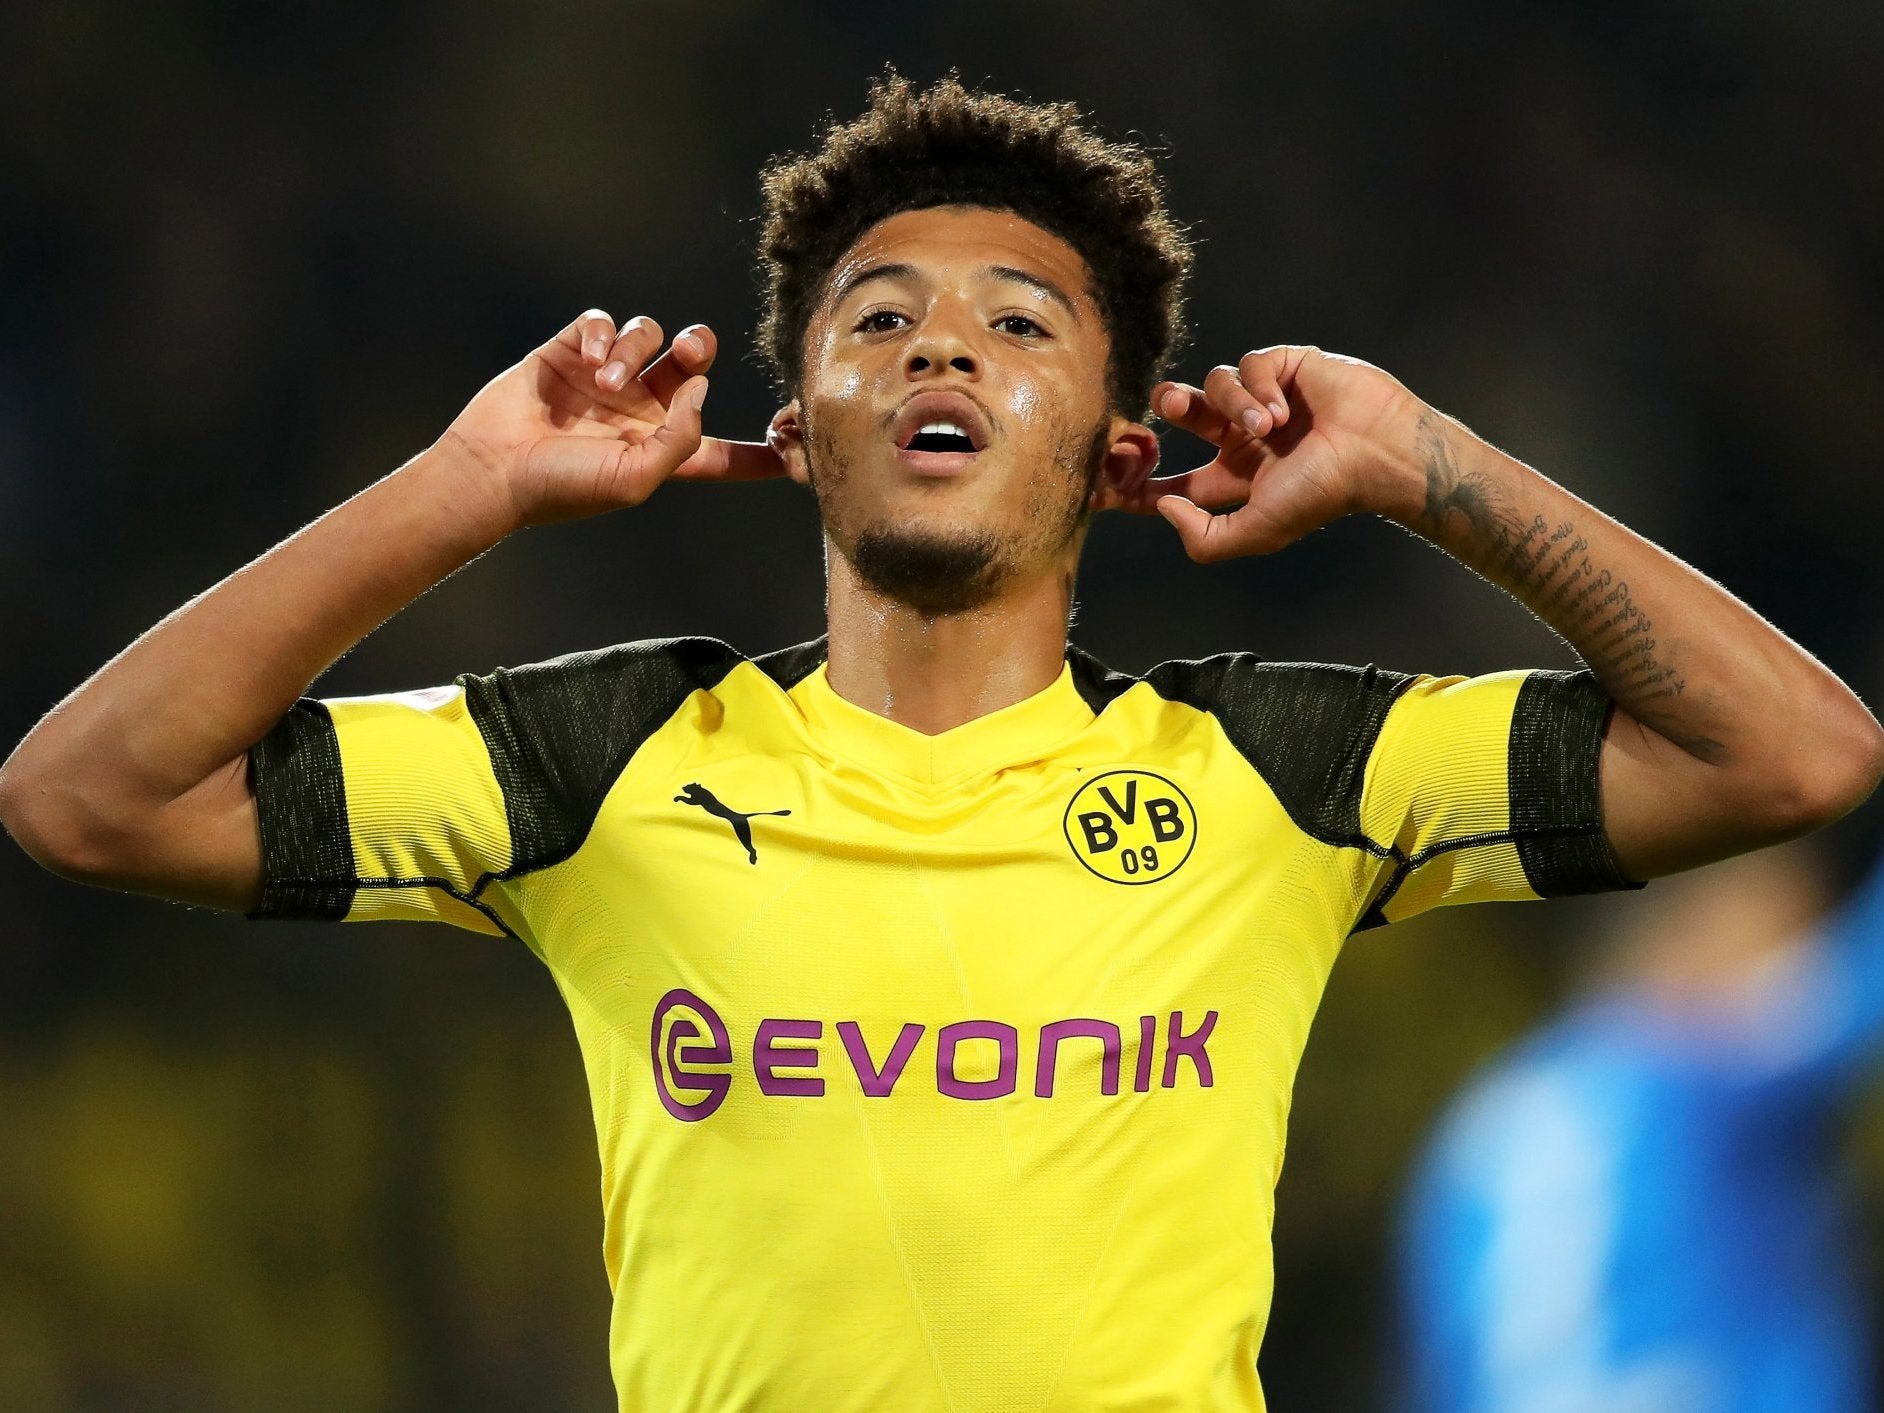 Jadon Sancho has impressed since joining Borussia Dortmund 14 months ago